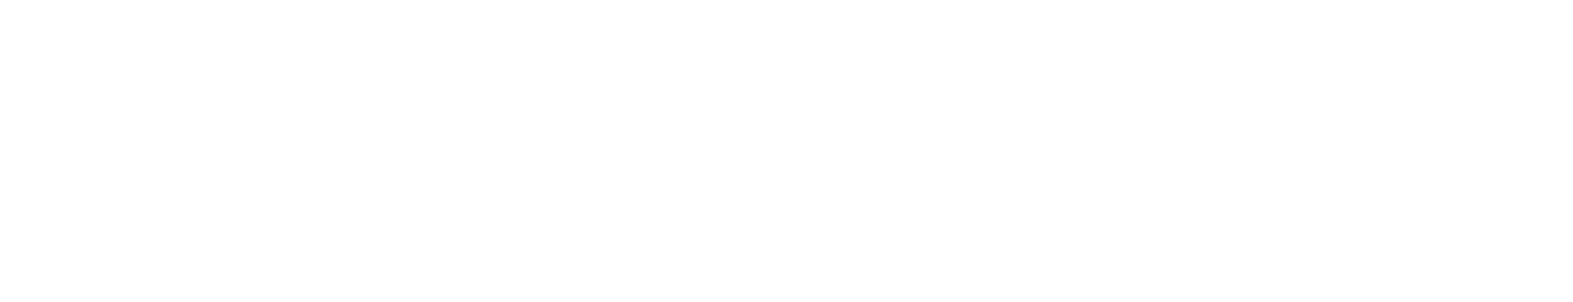 Fannie Mae
 logo large for dark backgrounds (transparent PNG)